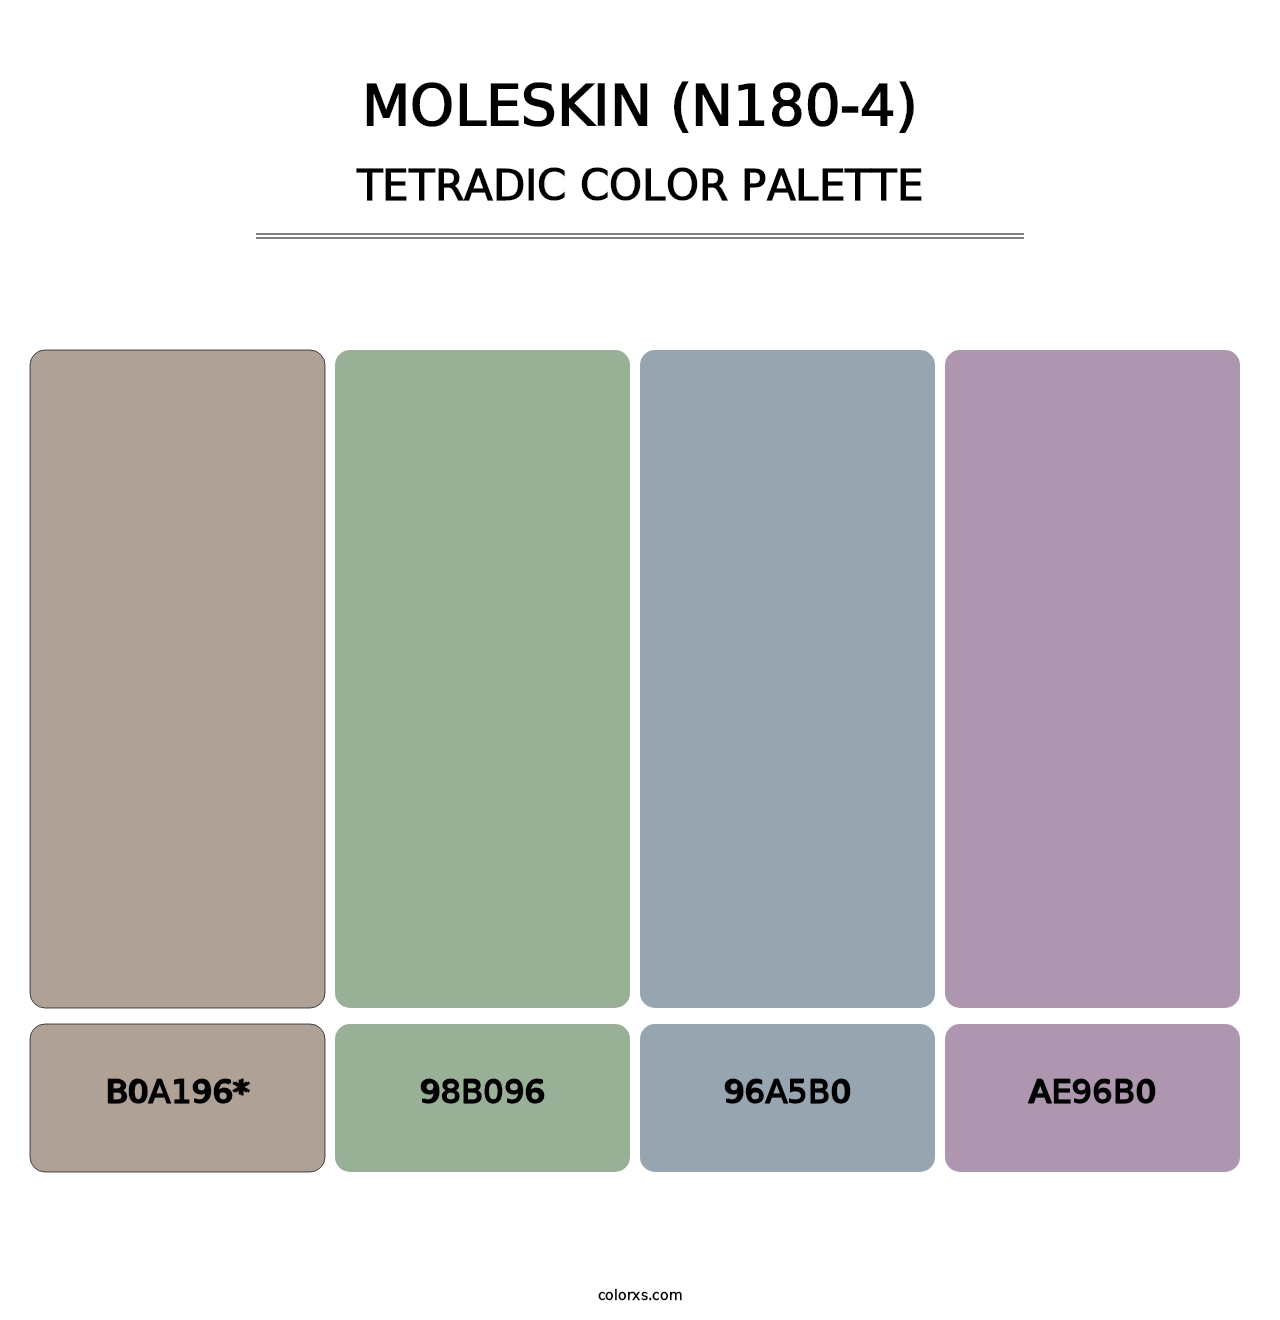 Moleskin (N180-4) - Tetradic Color Palette